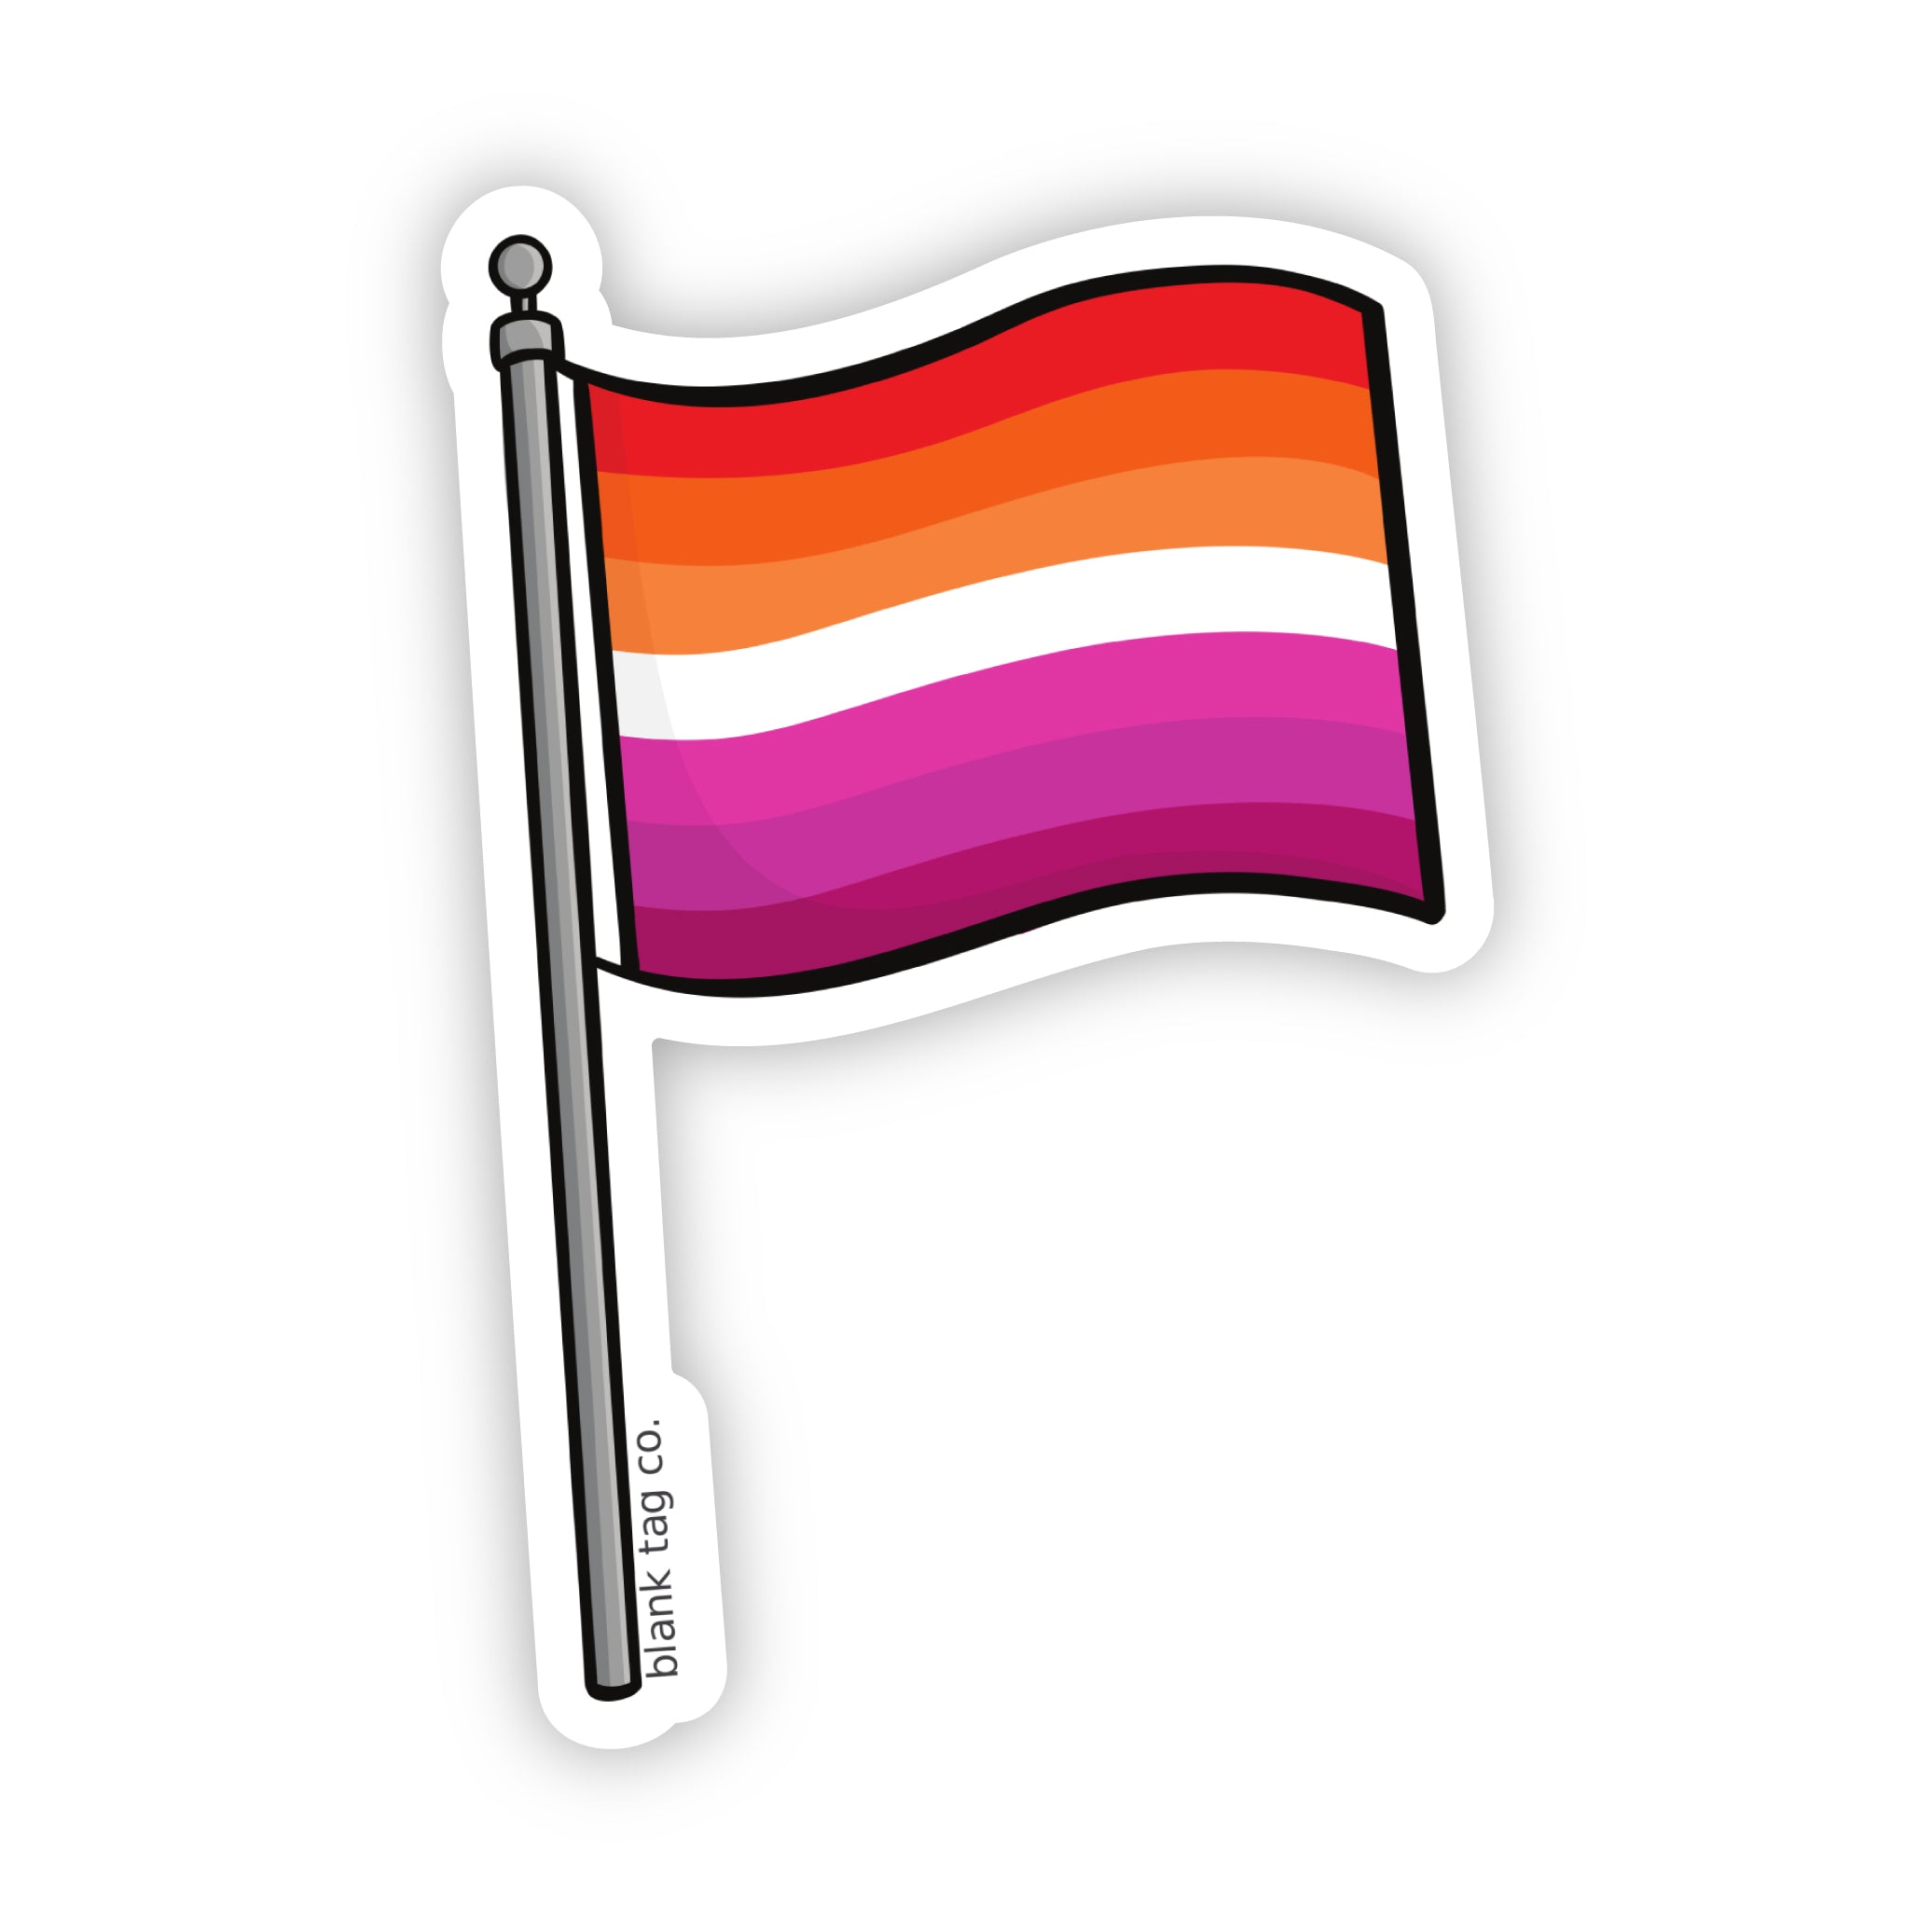 The Lesbian Pride Flag